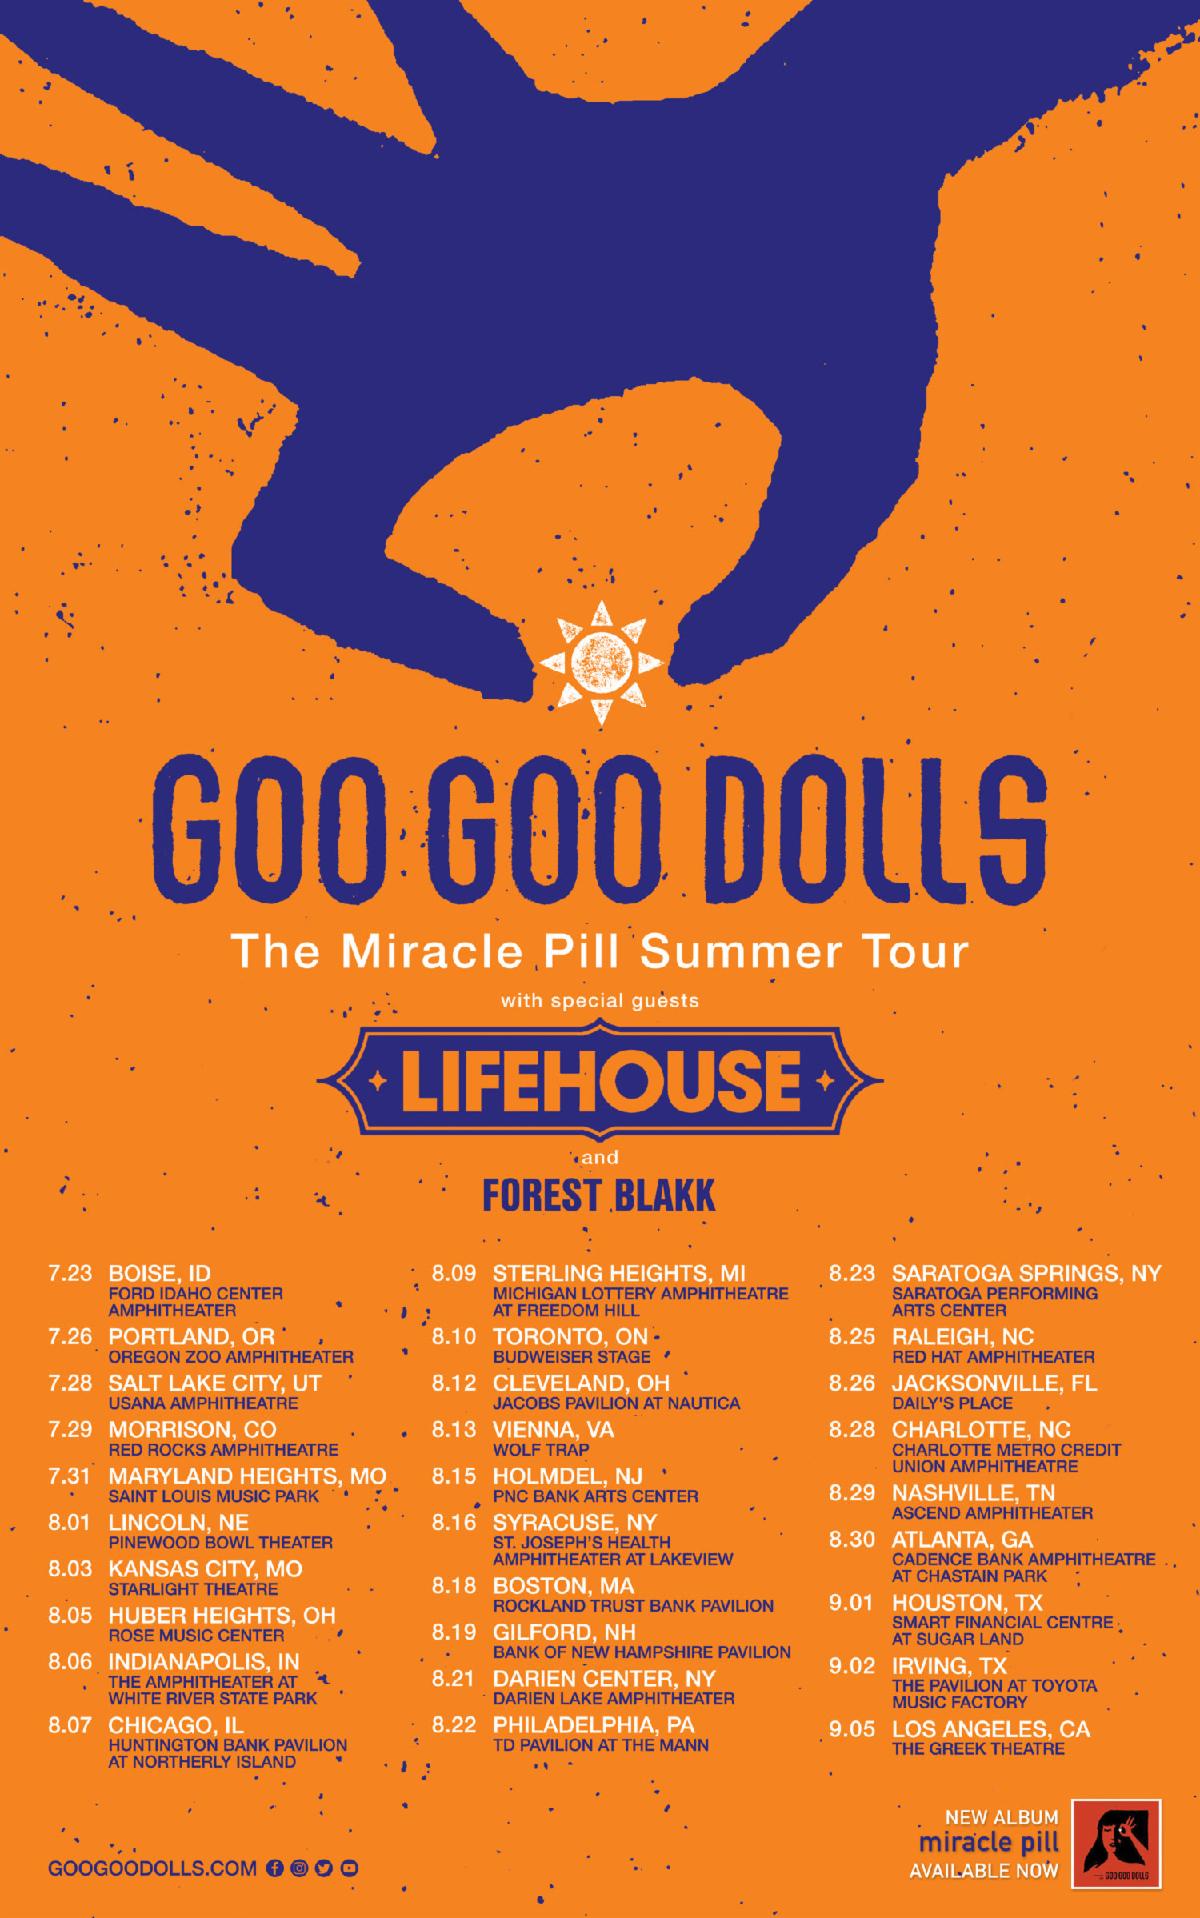 Goo Goo Dolls Announce Summer 2020 North American Headlining Tour